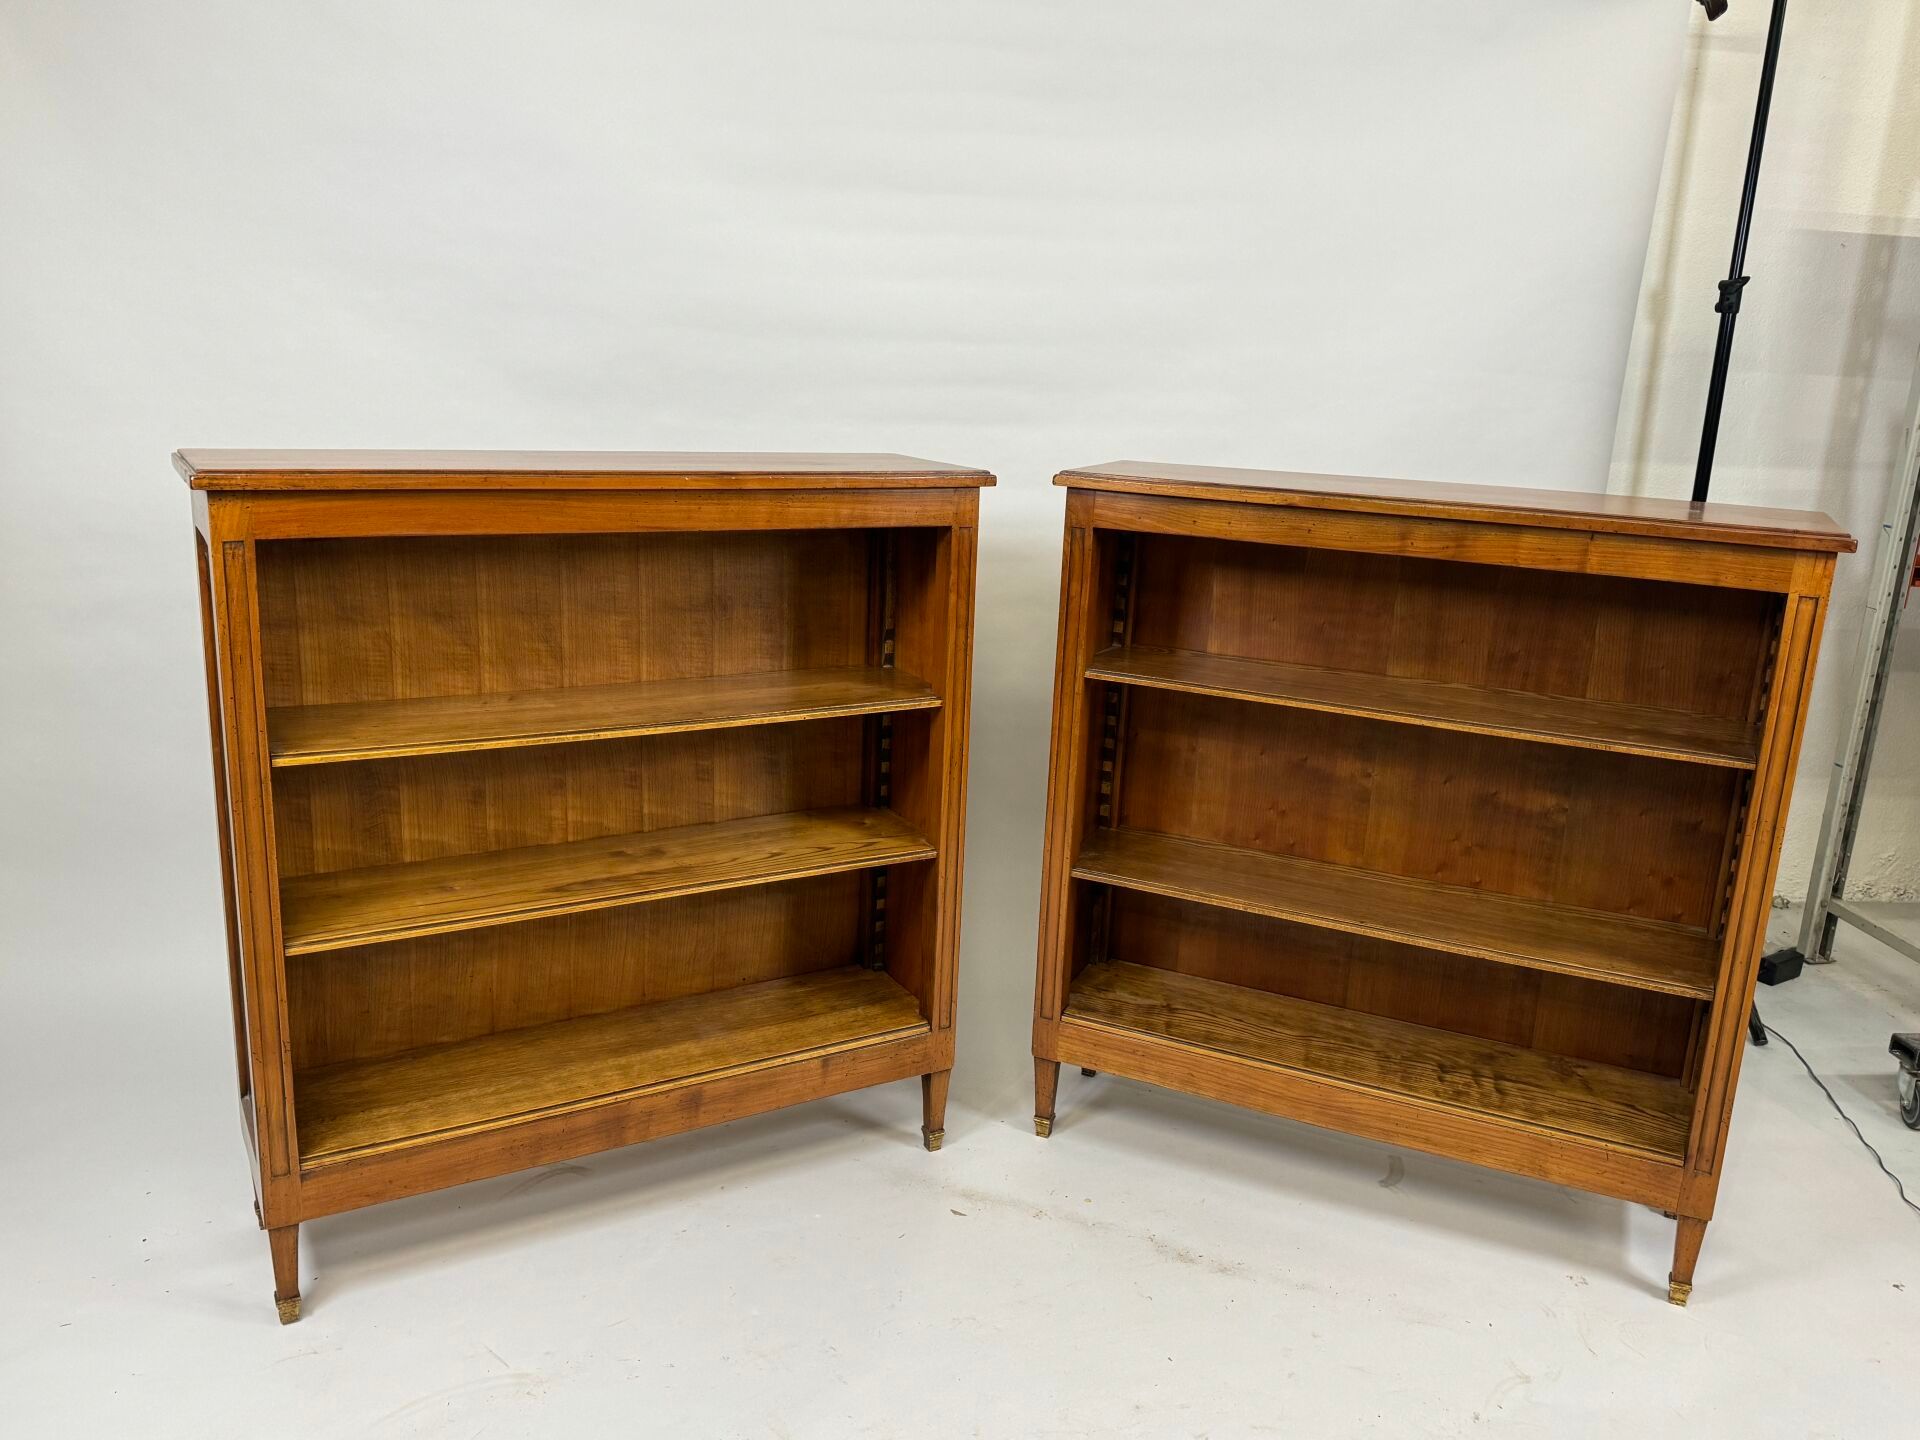 Null 一对模制樱桃木小书柜，带三个架子。
96 x 90 x 27 厘米。